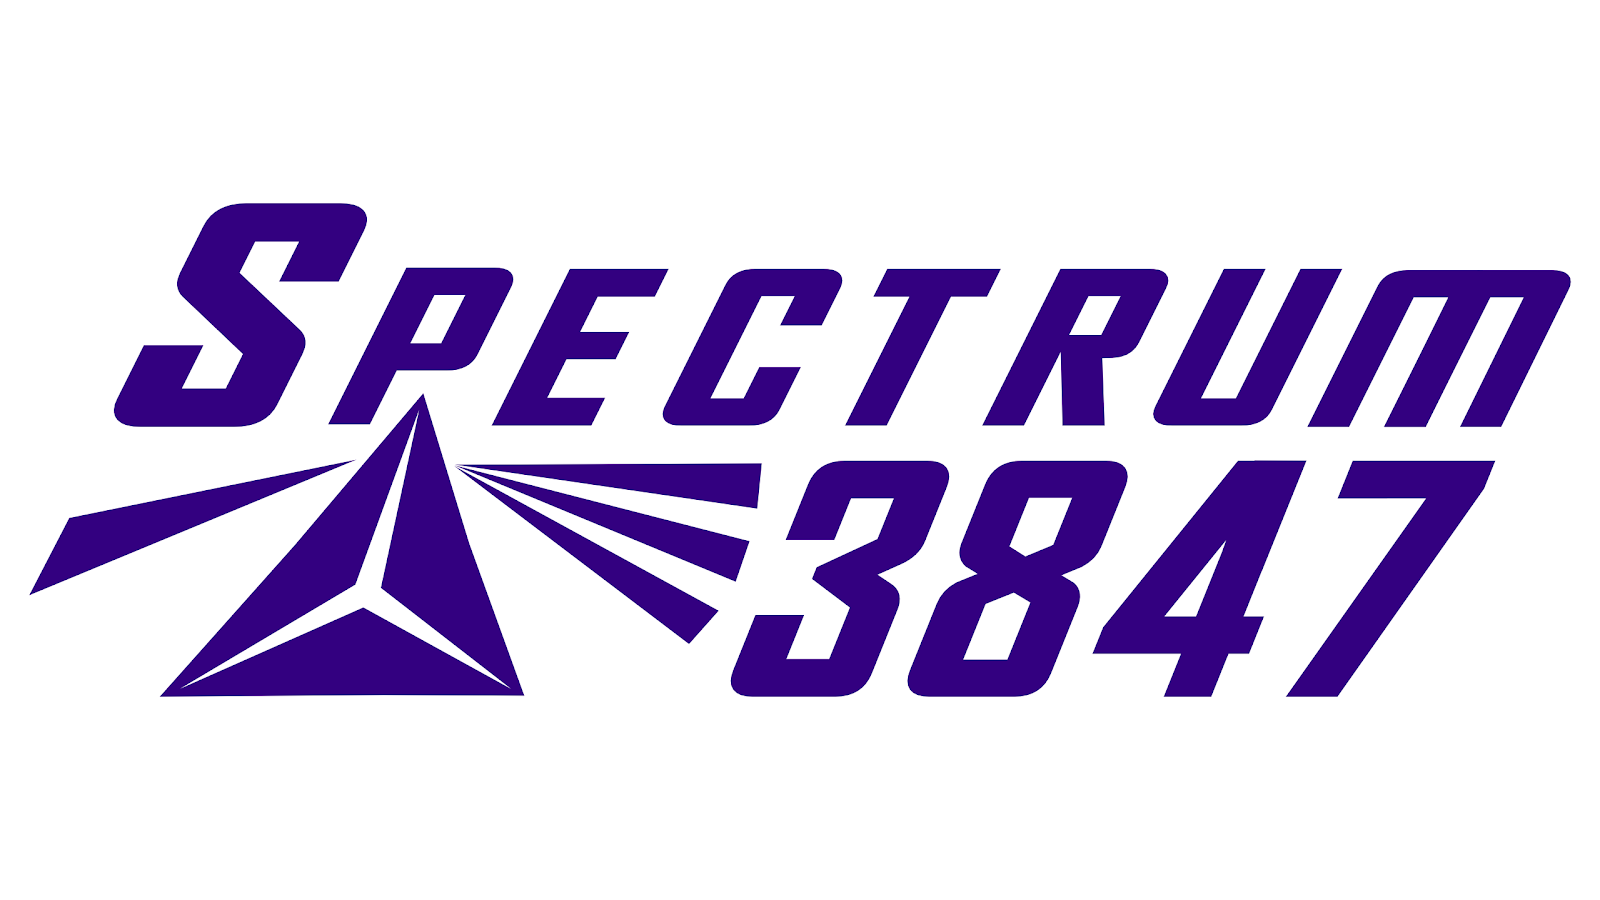 spectrum 3847 logo